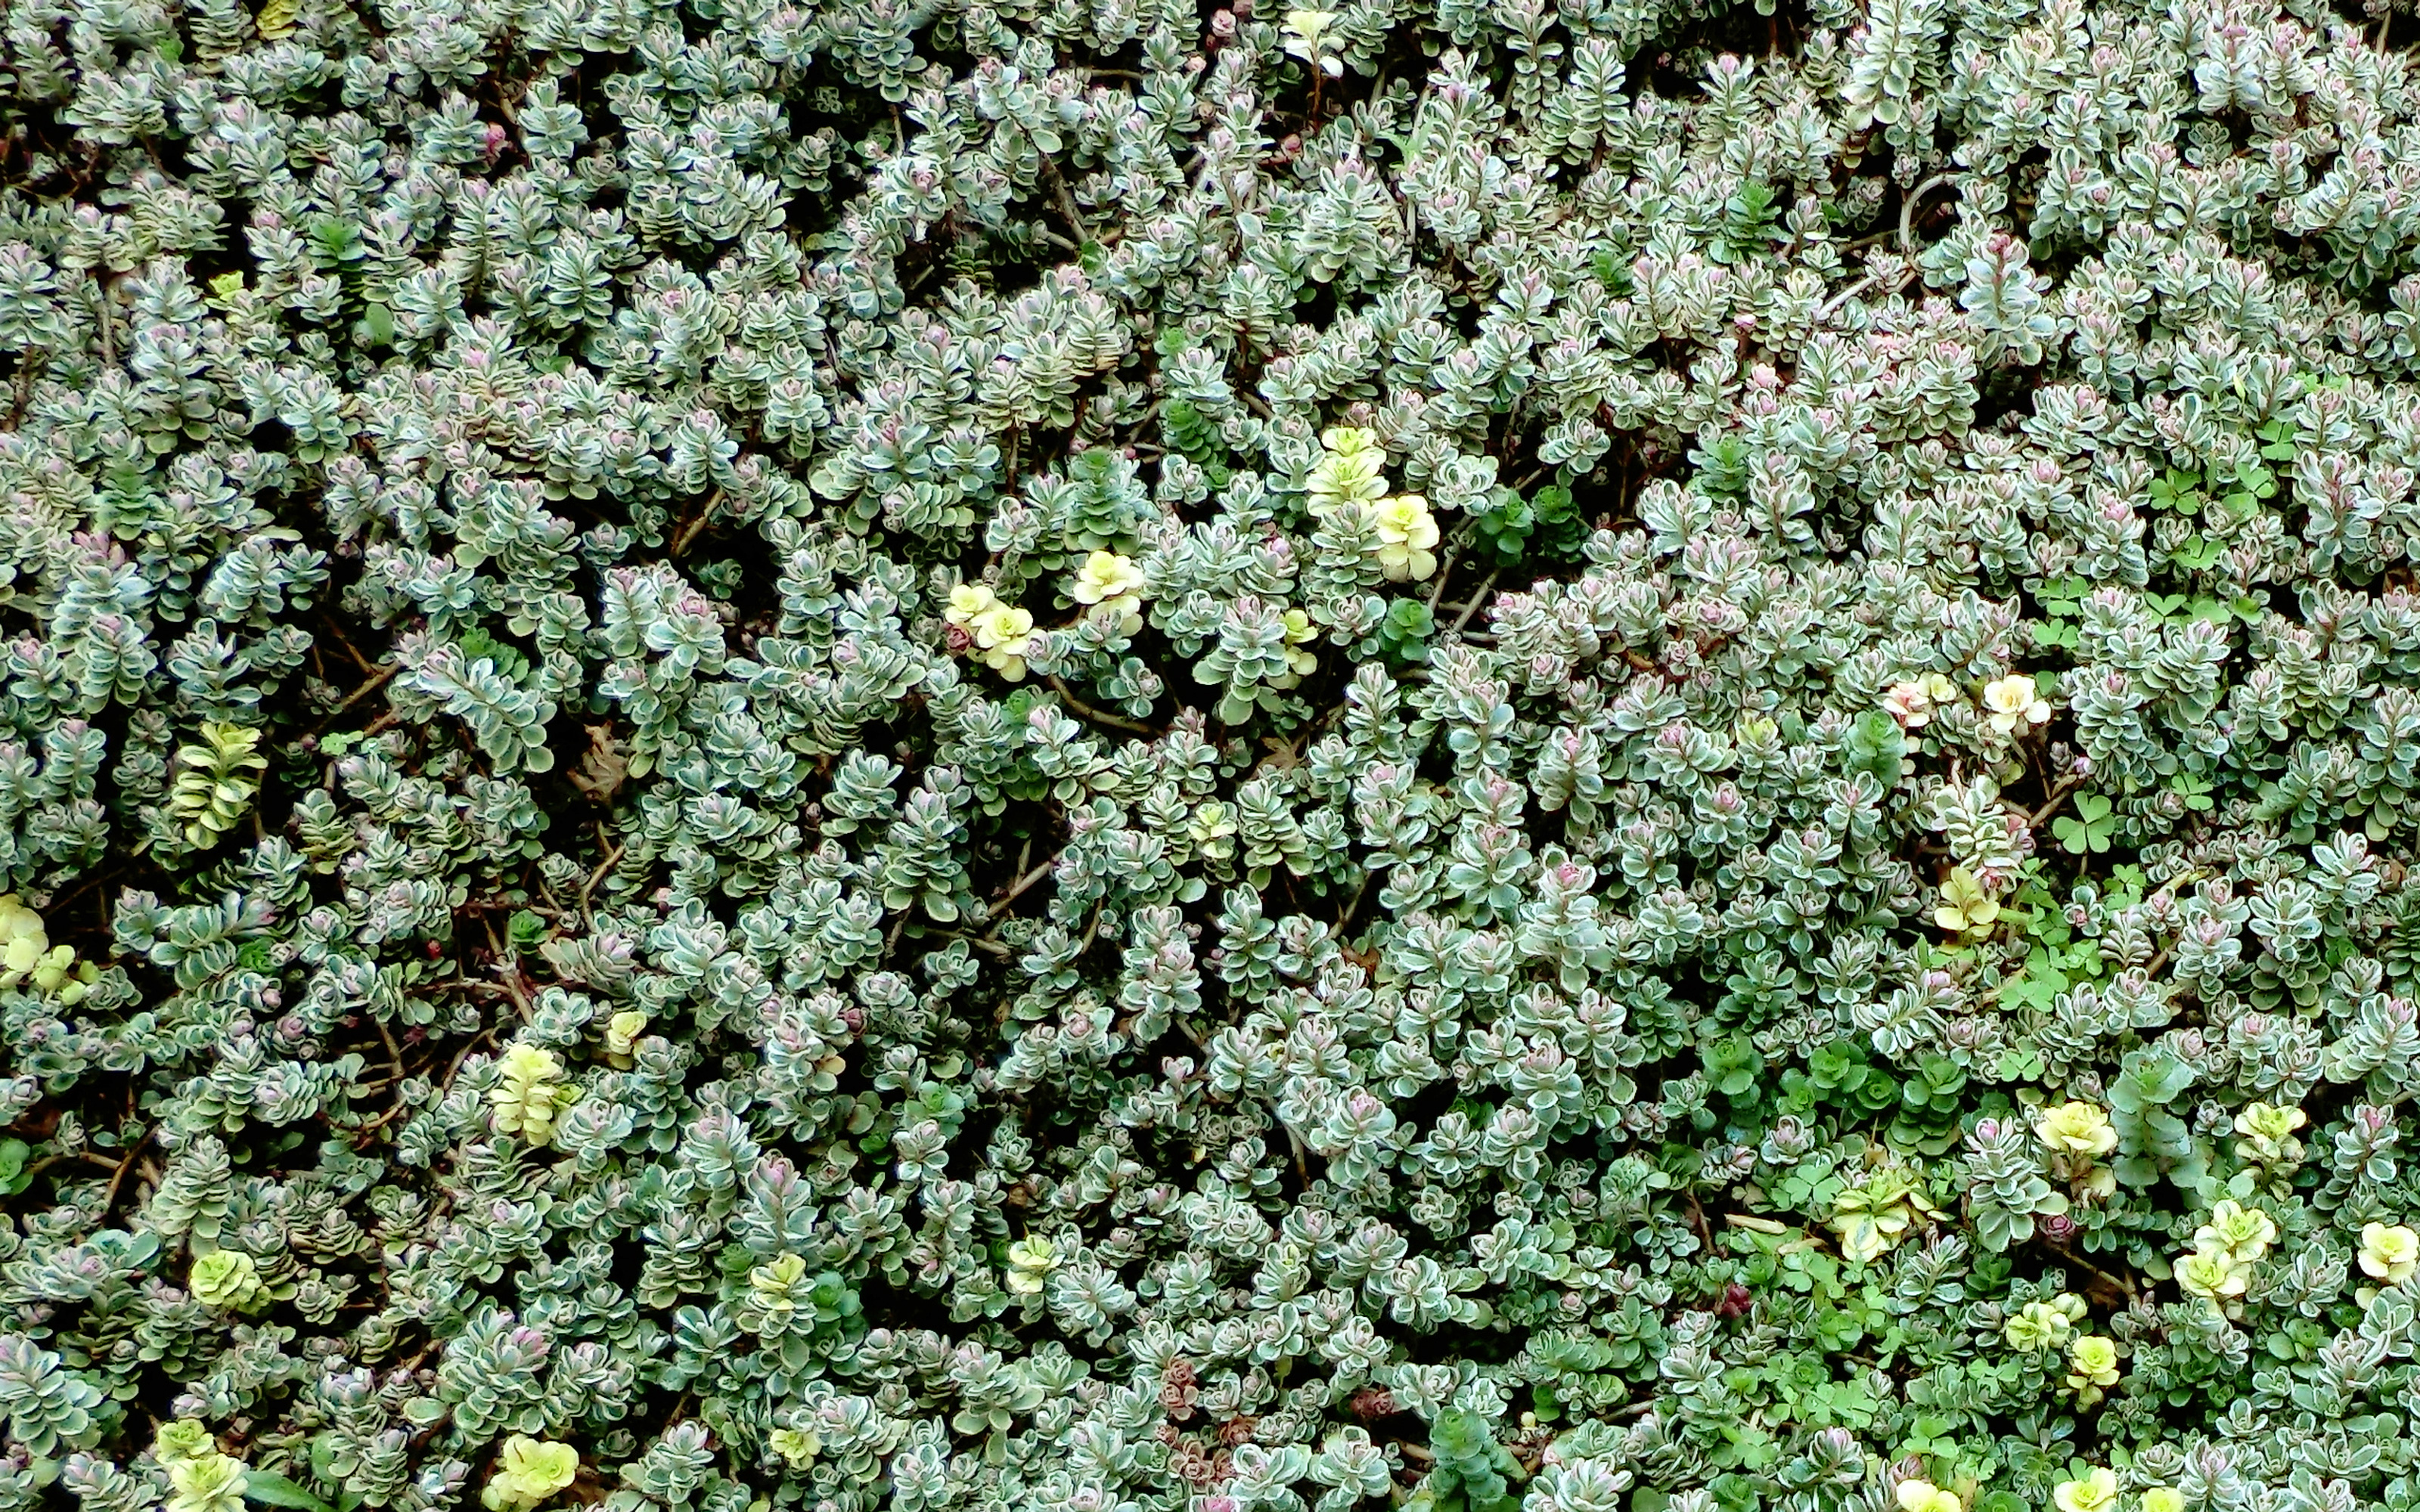 Sedum vegetation